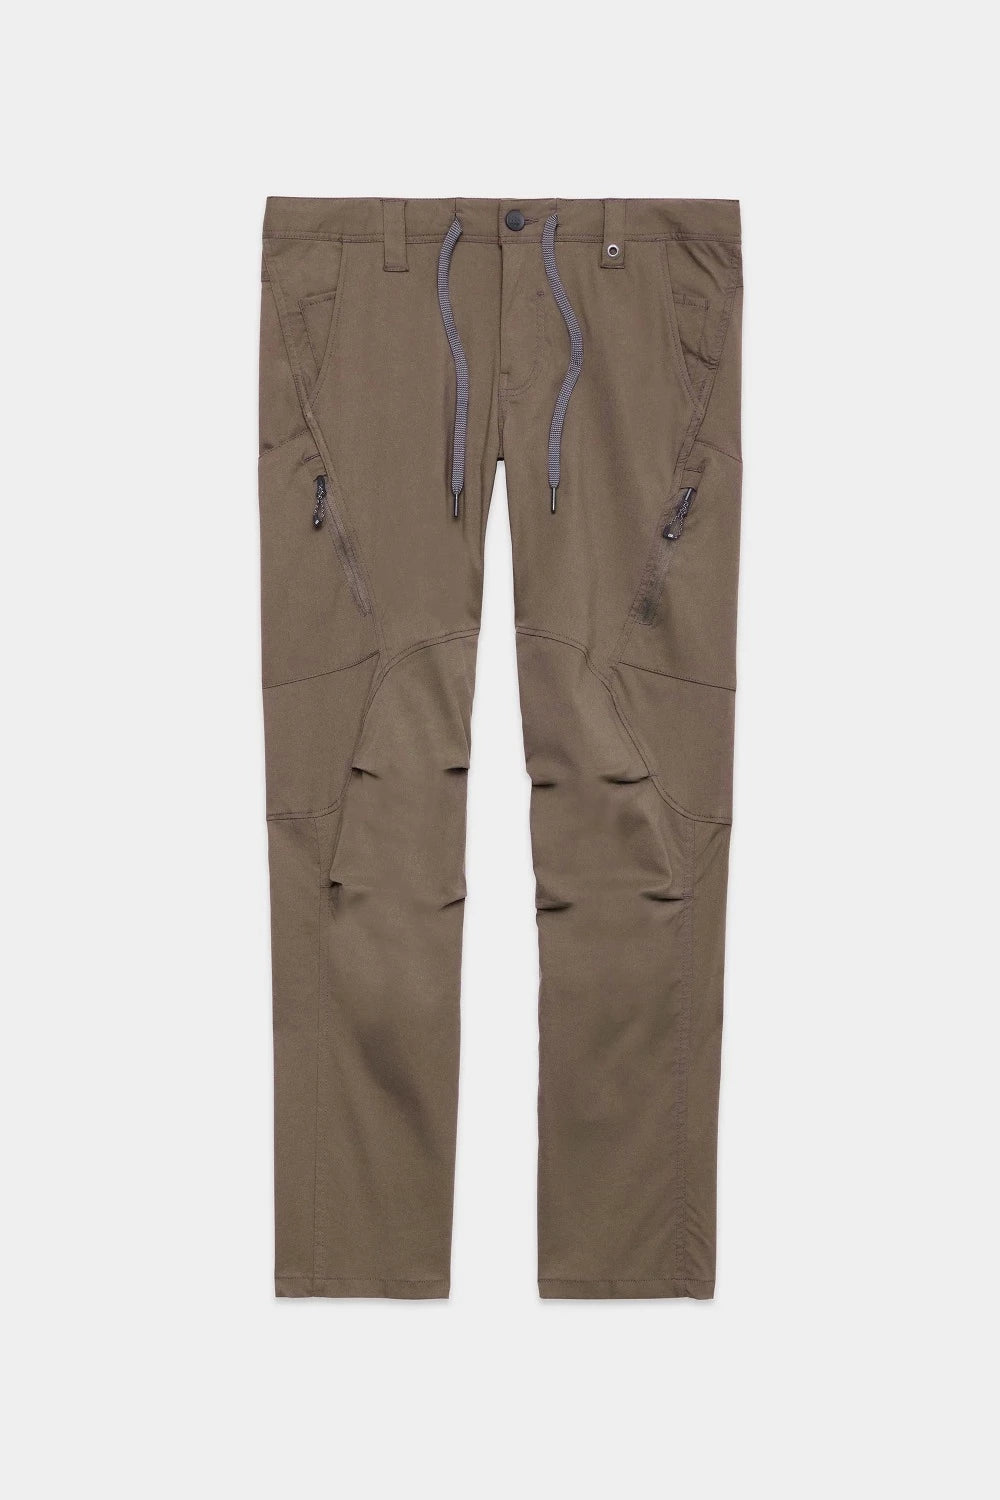 Alpine Trousers, DWR Cargo Pants